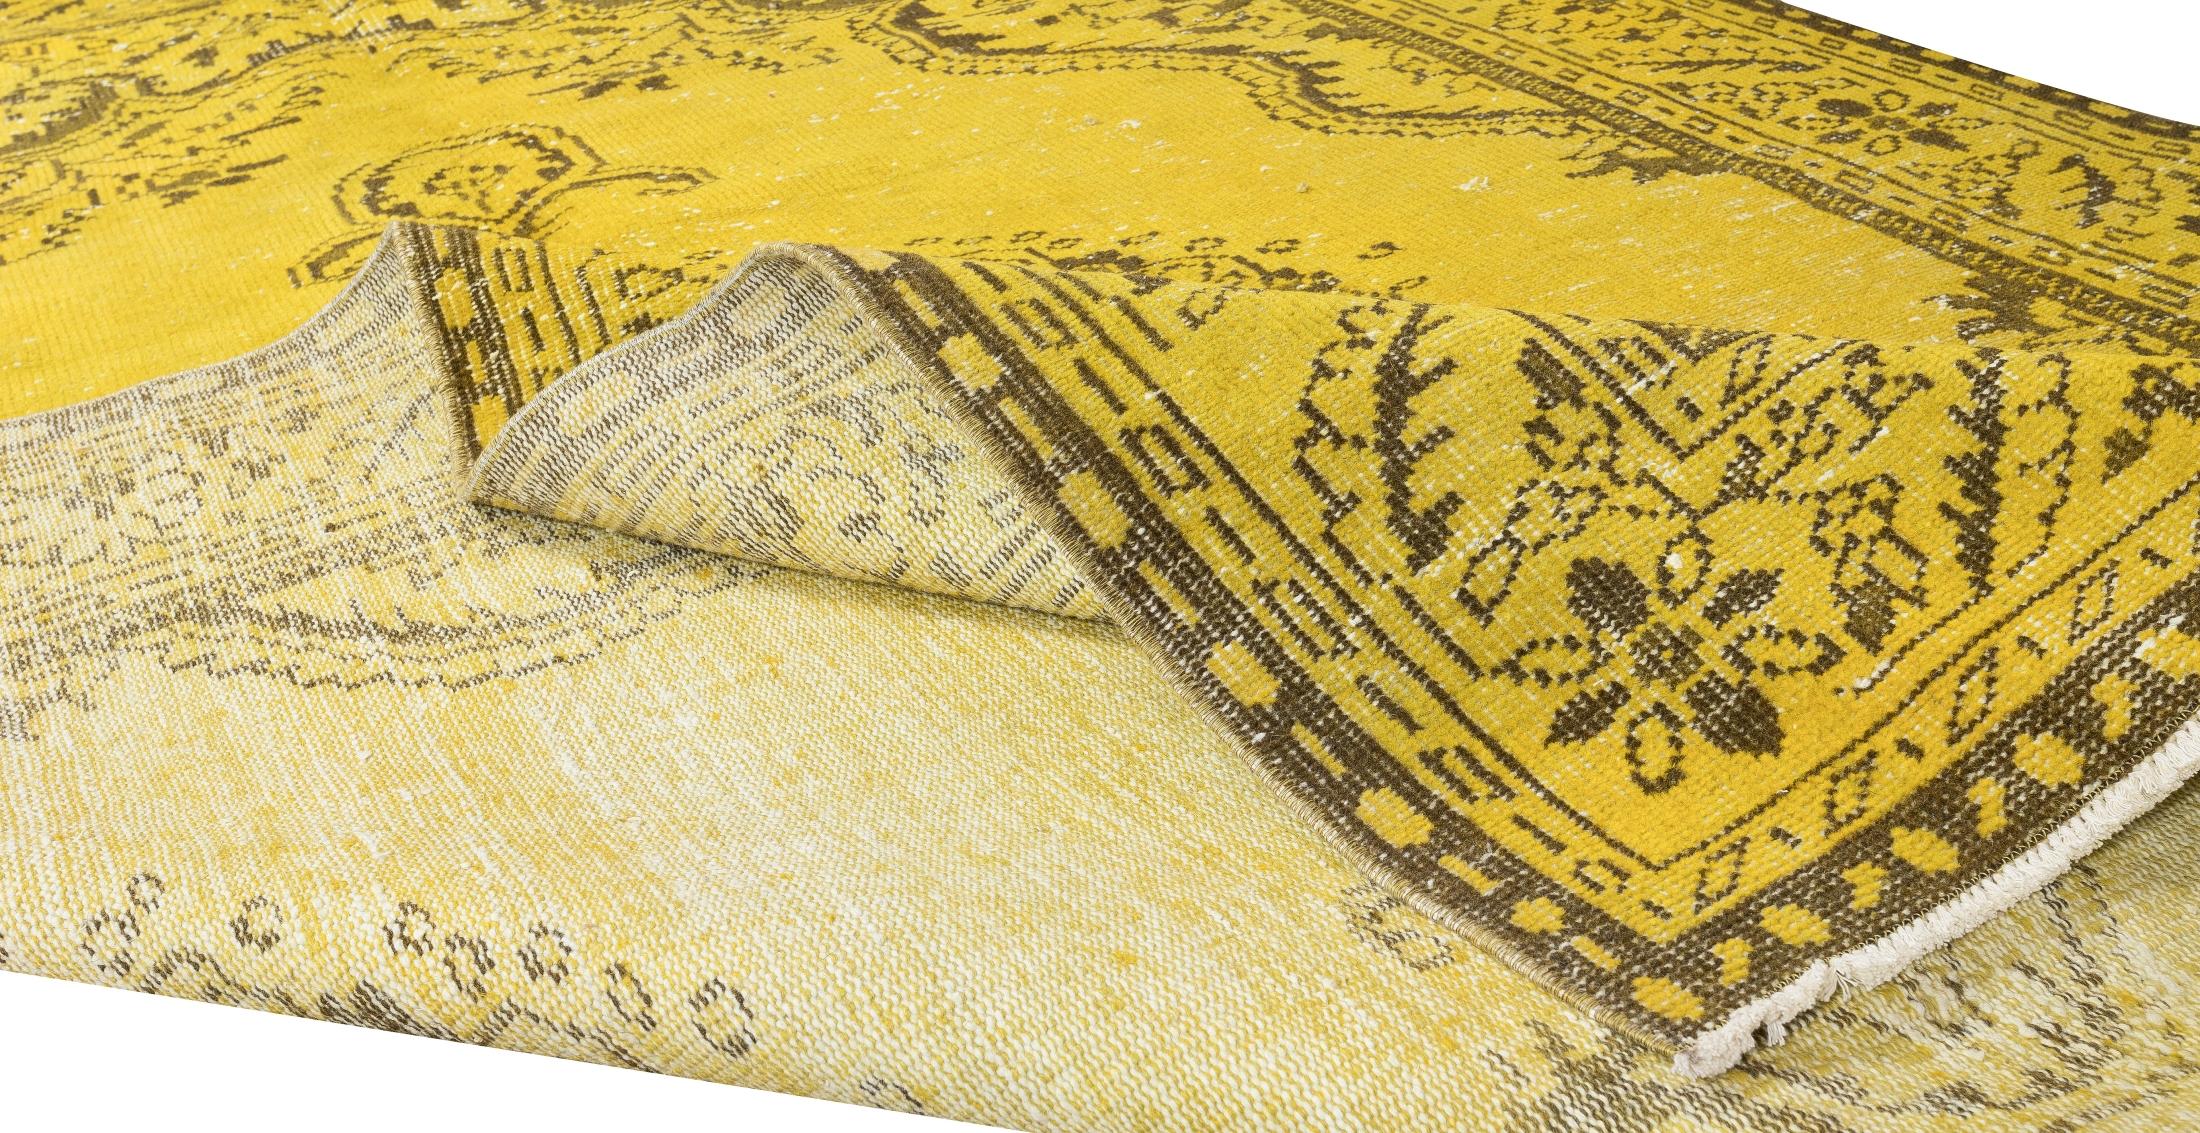 Hand-Woven 6.2x10.3 Ft Yellow Area Rug. Handmade Turkish Vintage Carpet, Modern Home Decor For Sale